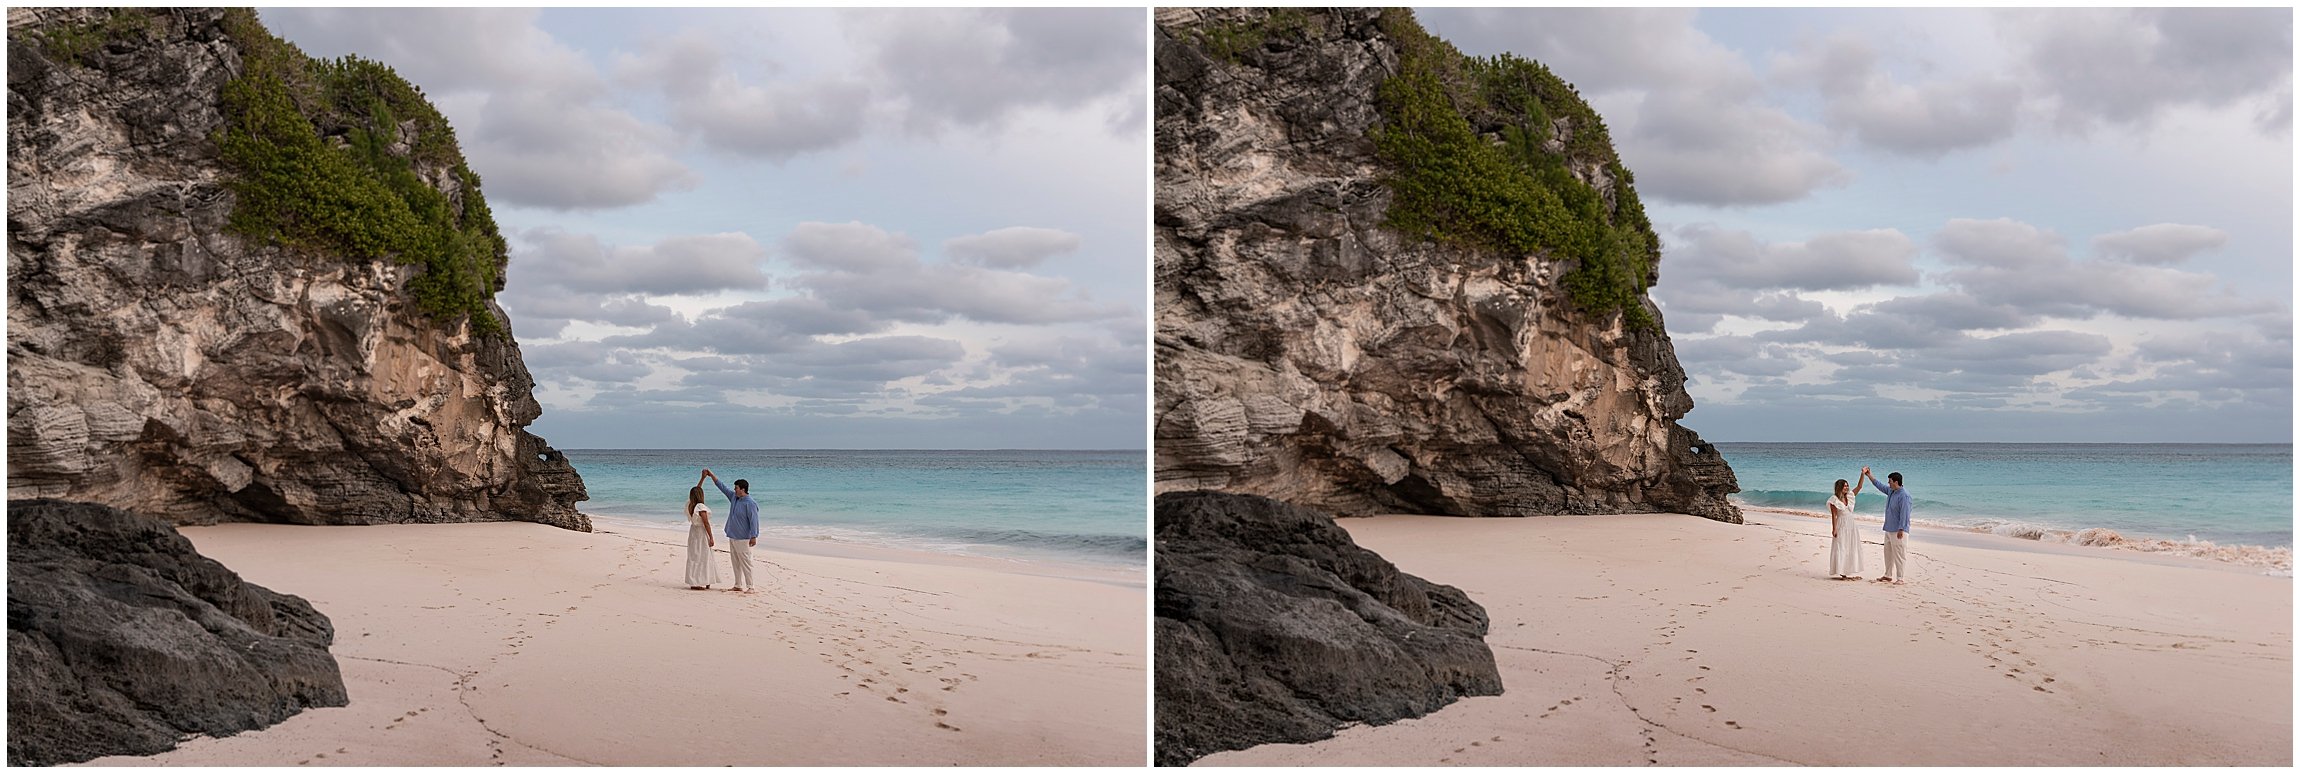 Mid Ocean Club Bermuda_Photographer_©Fiander Foto_010.jpg